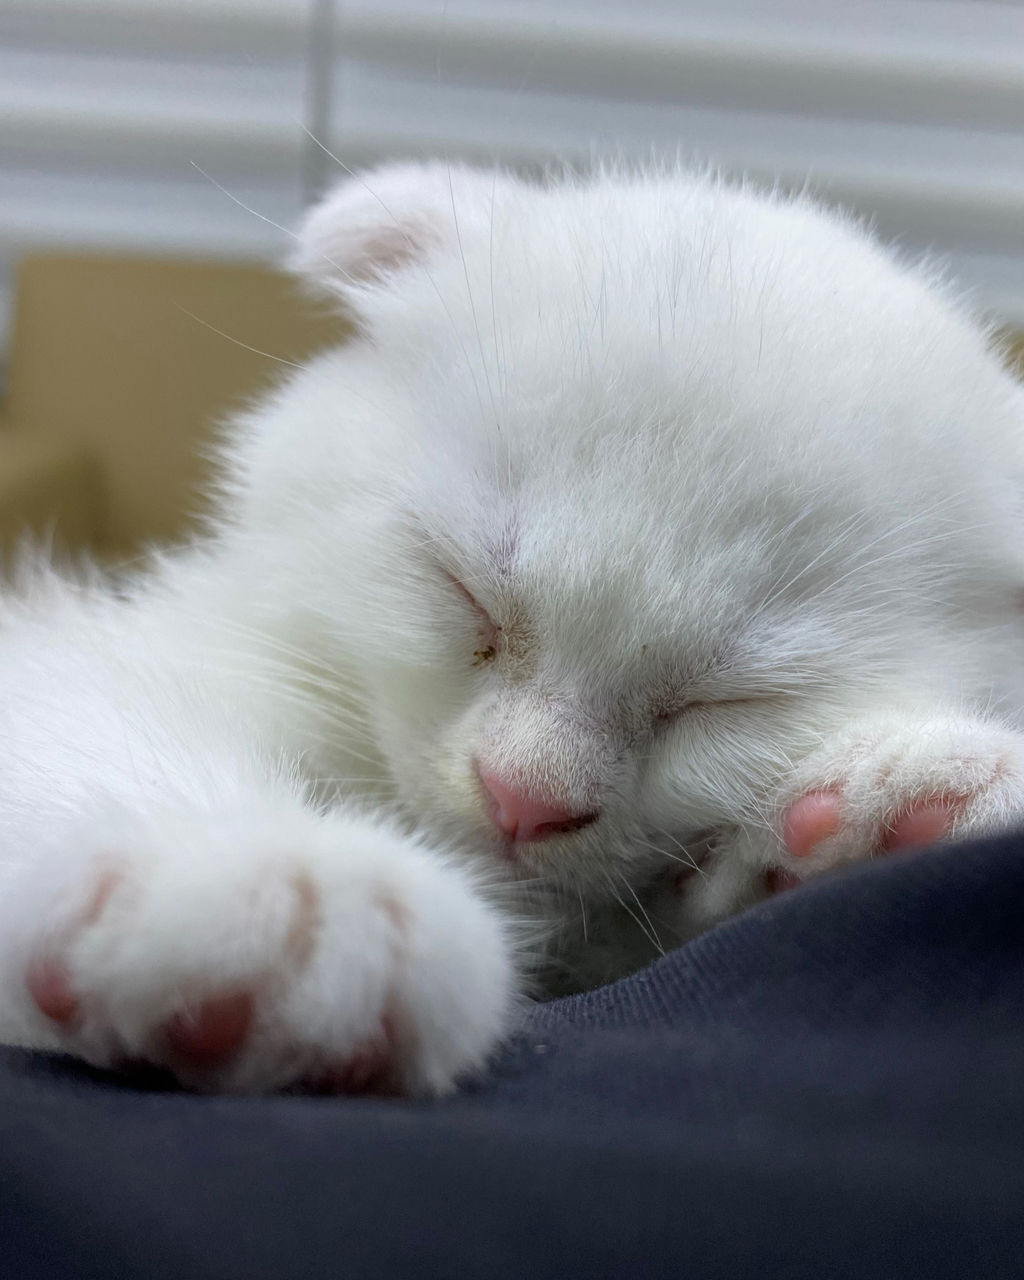 CLOSE-UP OF A SLEEPING CAT